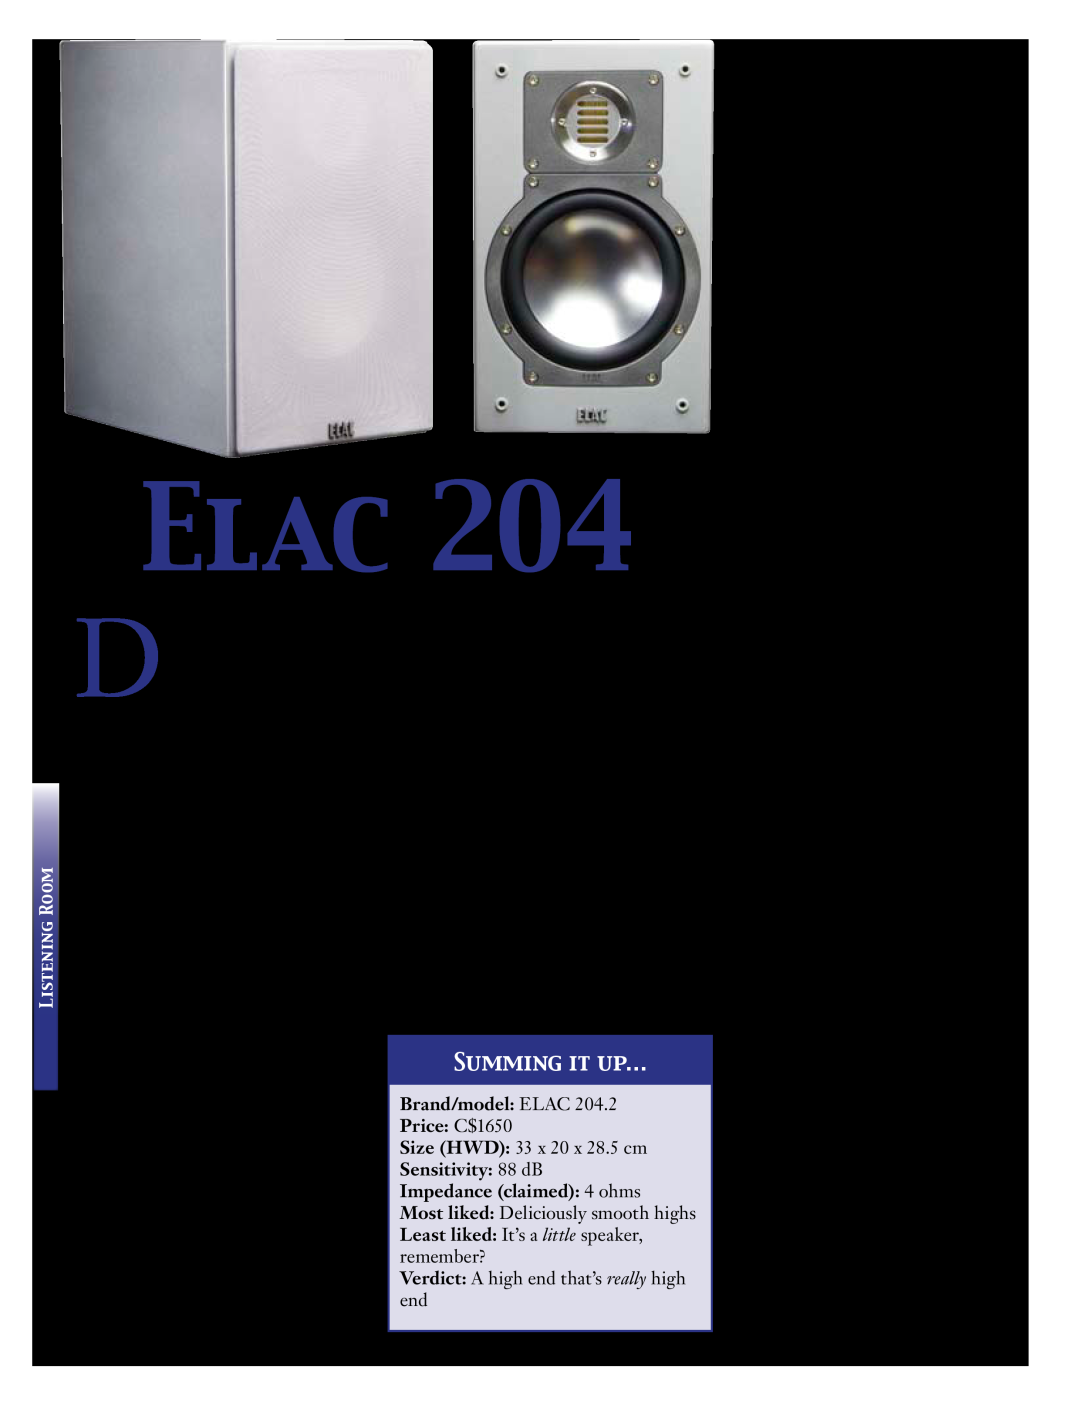 Koss 76 manual Elac, Summing It Up…, Brand/model ELAC Price C$1650, Sensitivity 88 dB Impedance claimed 4 ohms 